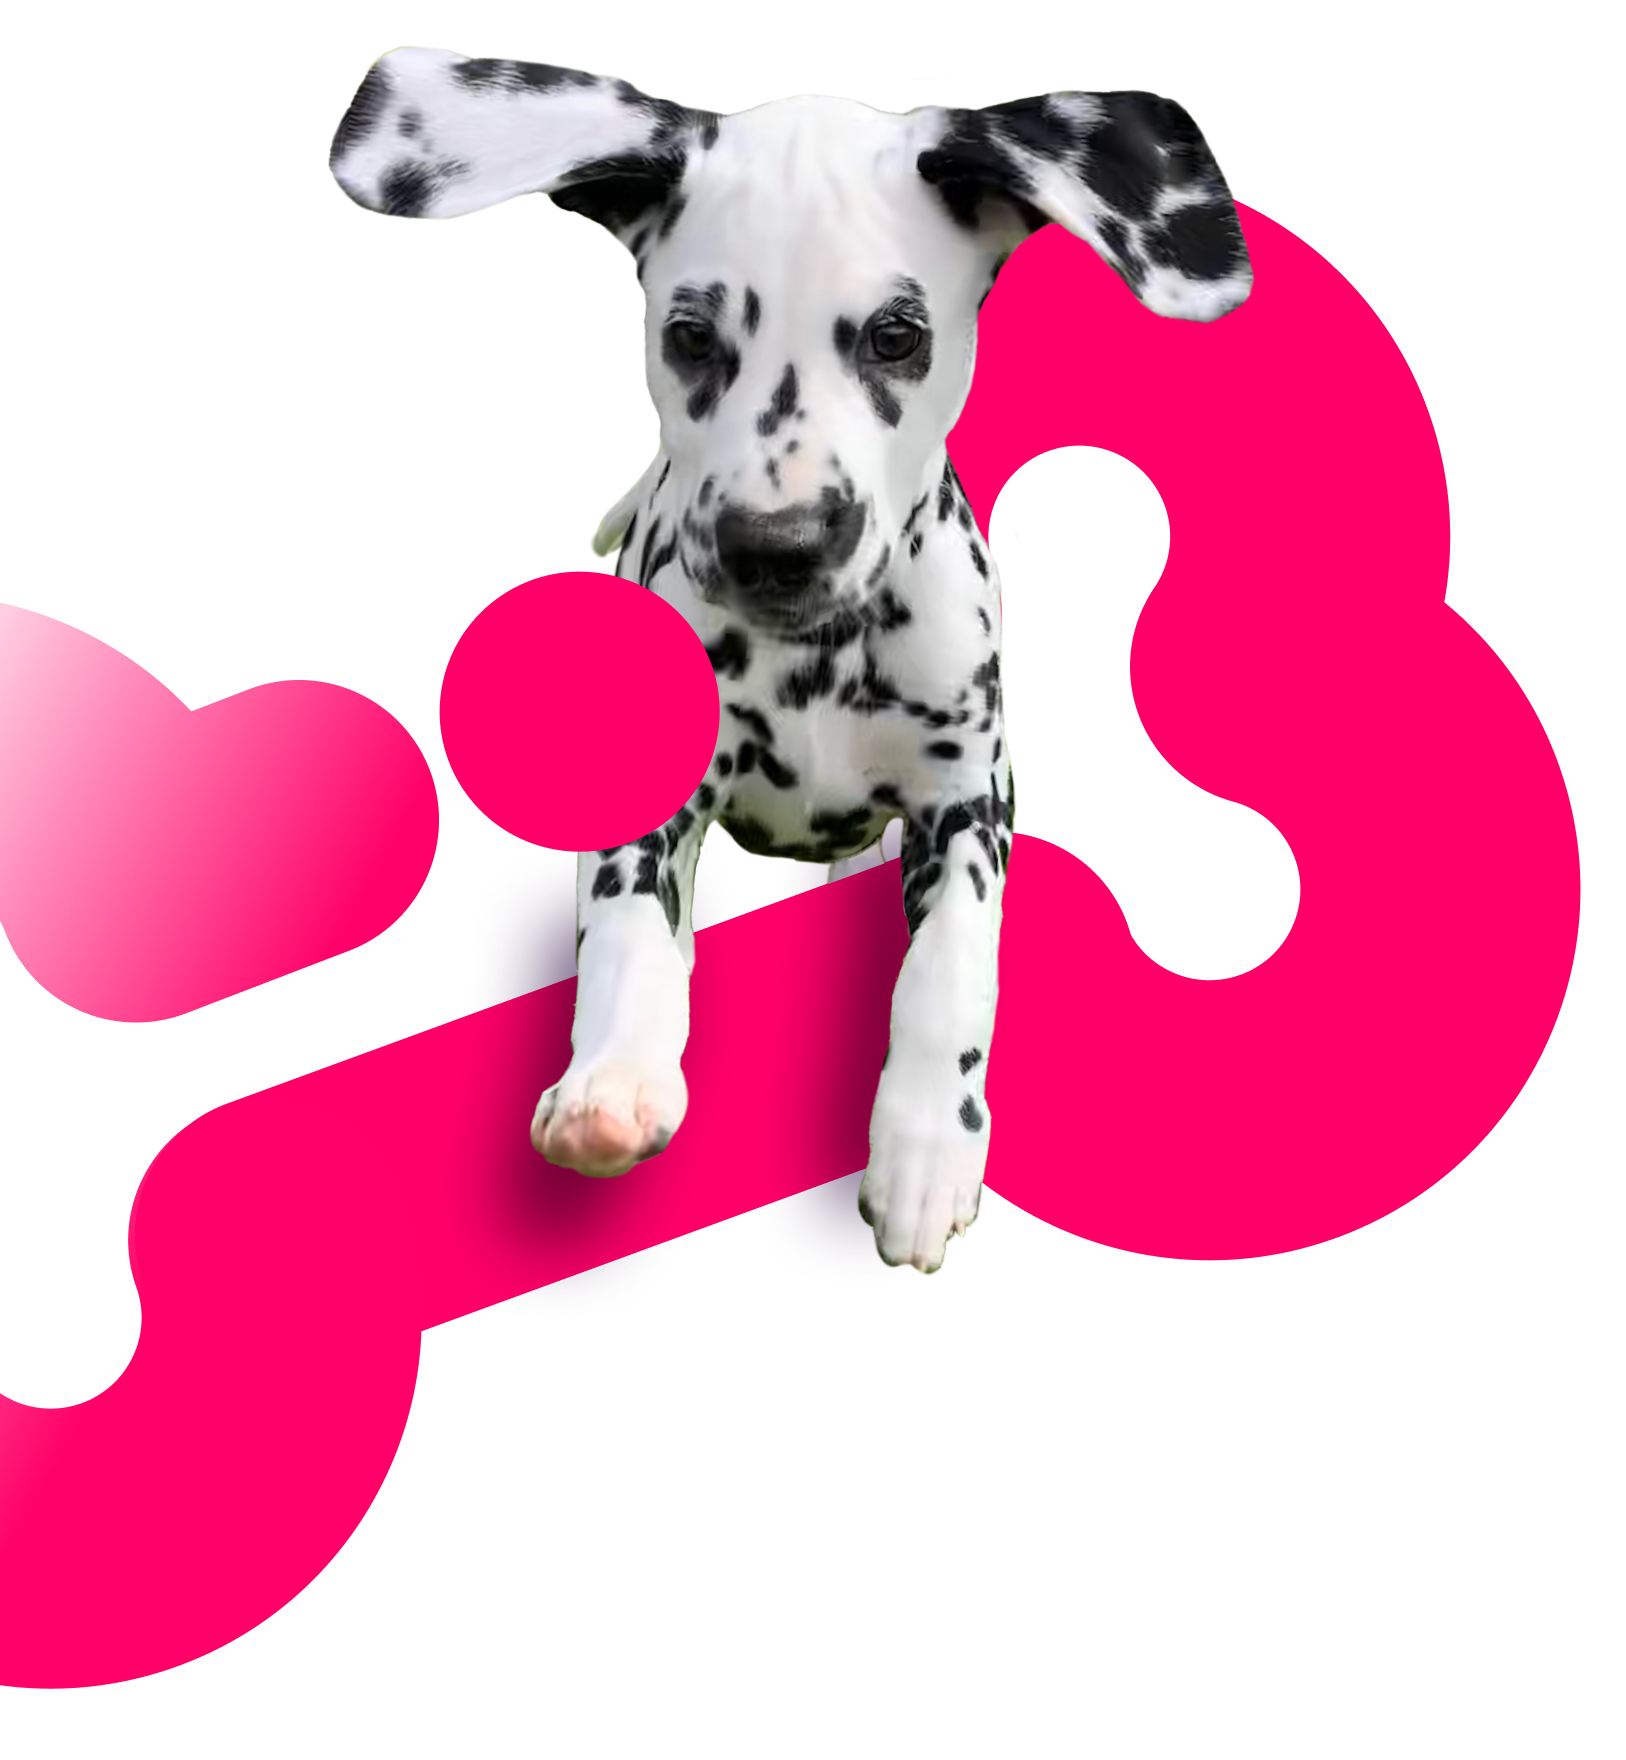 Bone shaped snag with Dalmatian puppy Luna jumping forward